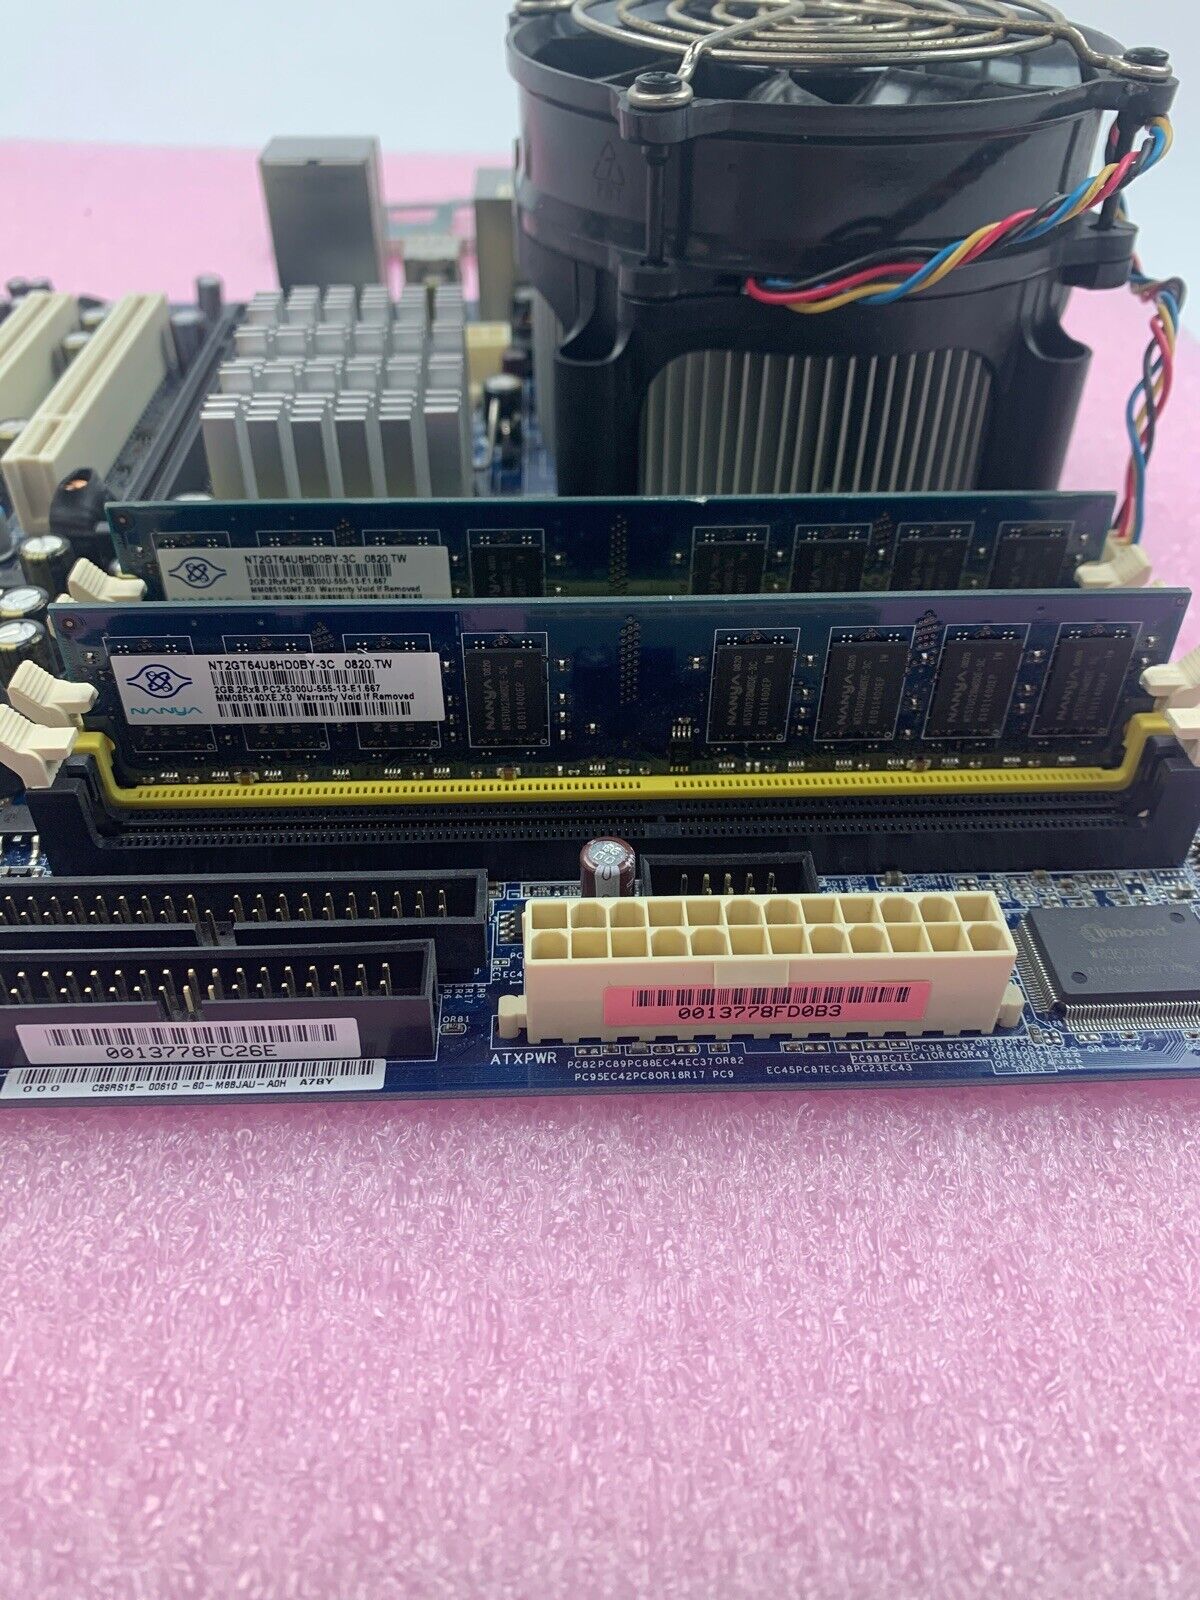 Samsung ZEUS-60 Motherboard Intel Core2Duo E6550 2.3GHz CPU 4GB RAM IOS HS